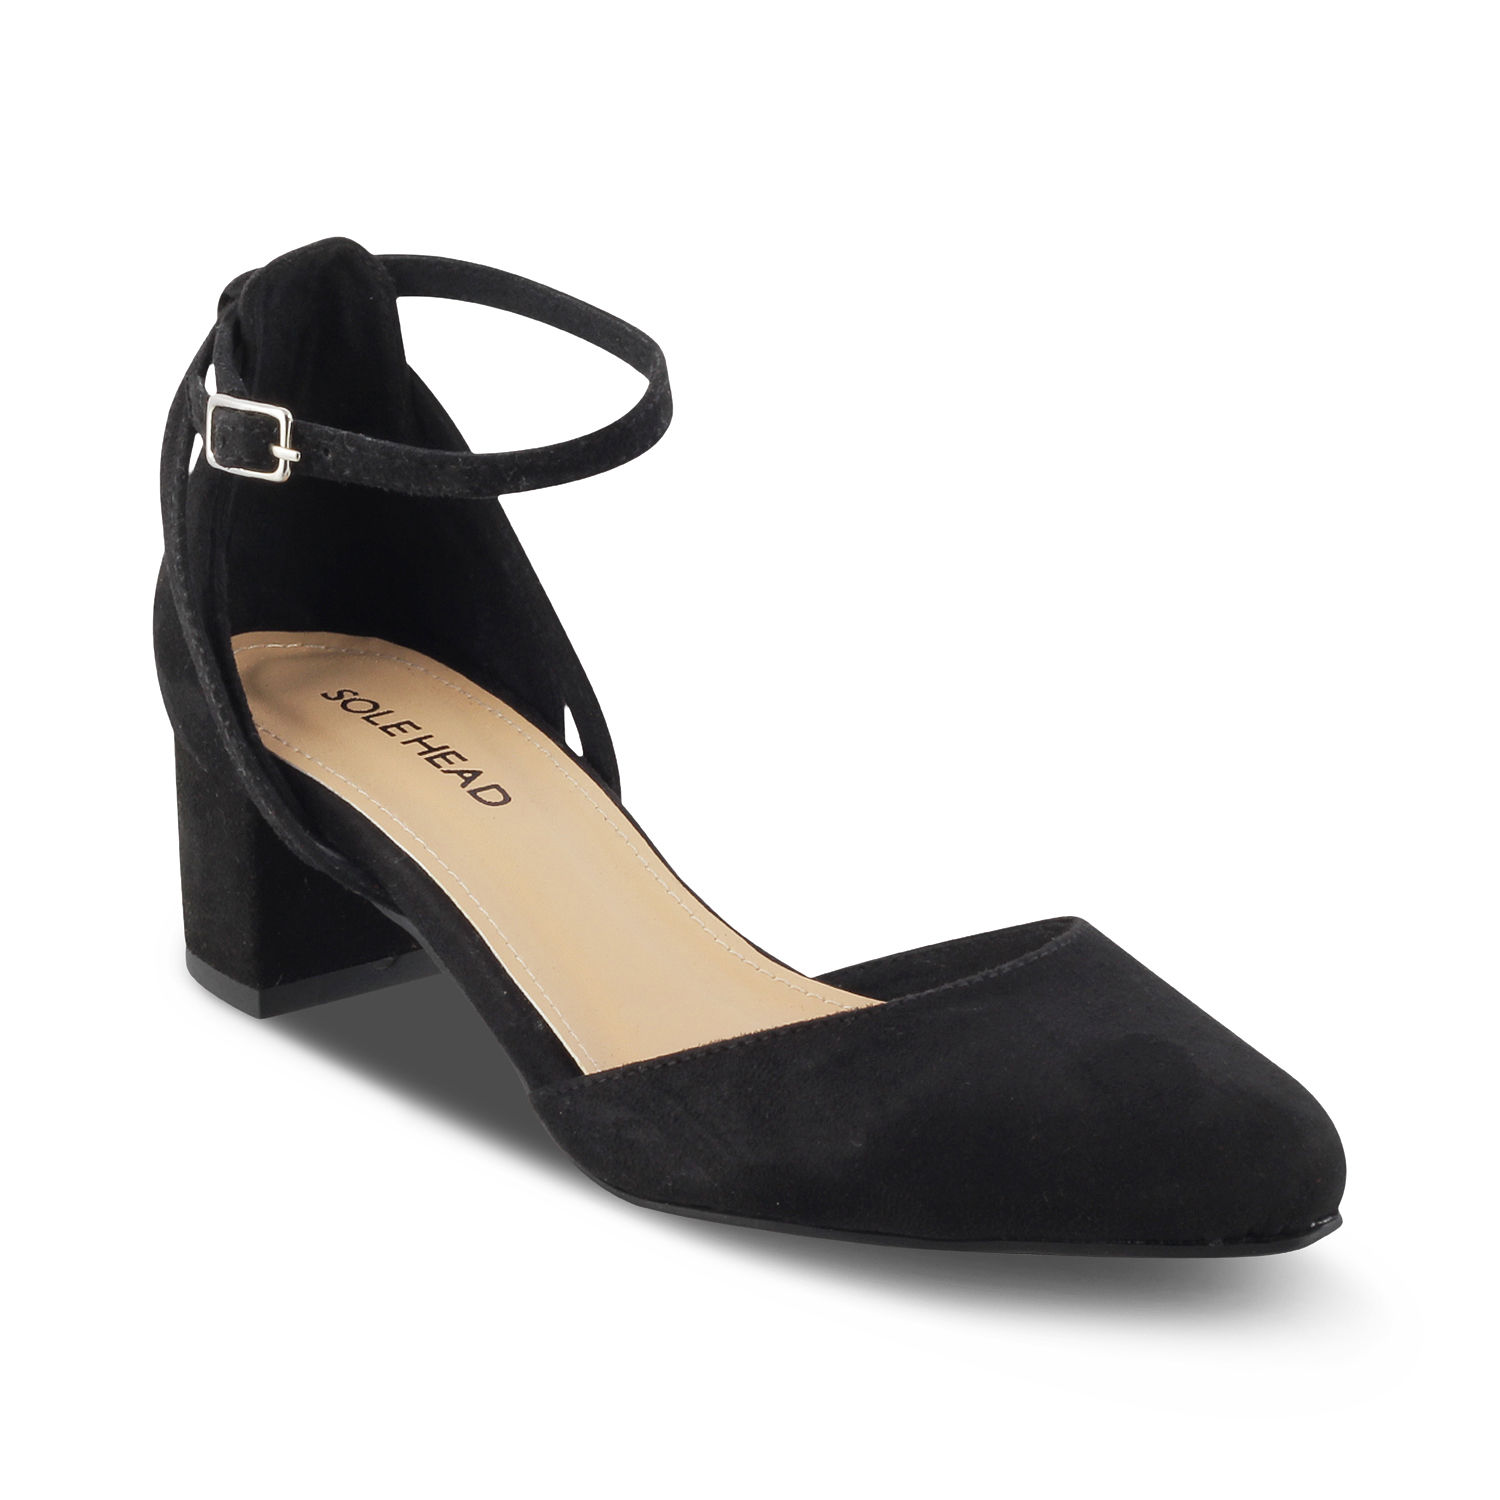 SOLE HEAD Black Heels Sandal: Buy SOLE 